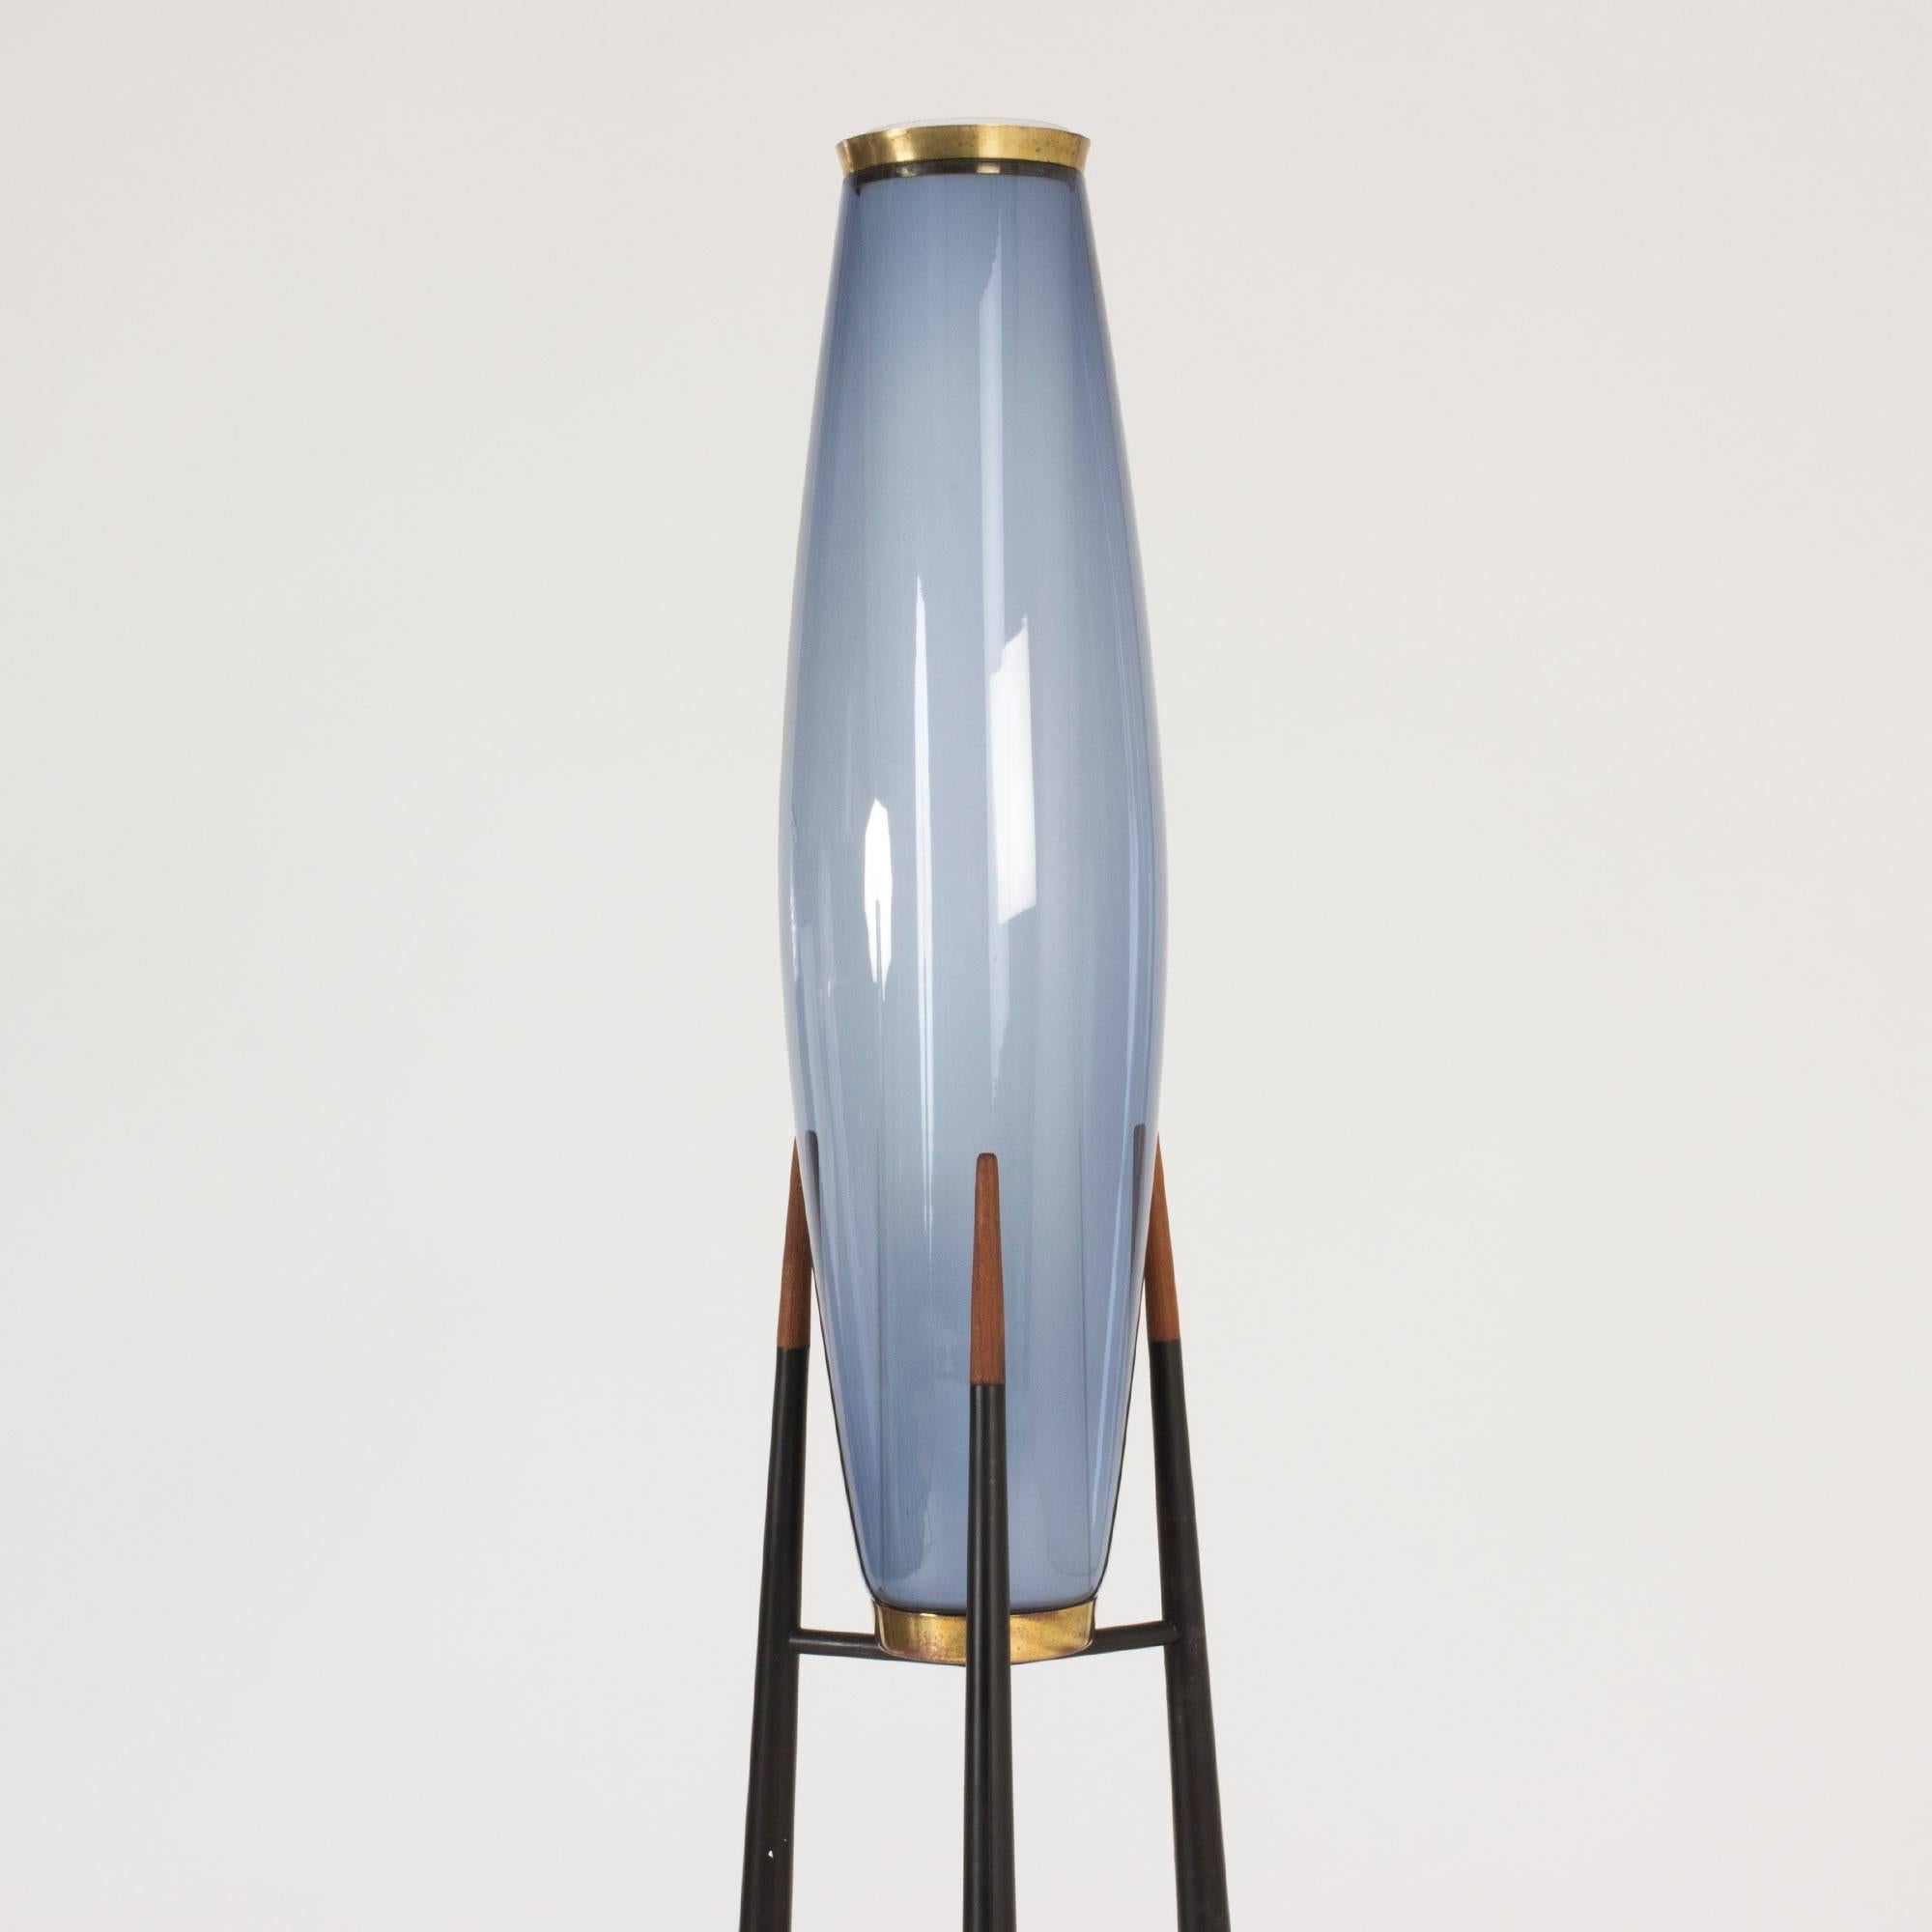 Scandinavian Modern Metal and Glass Floor Lamp by Svend Aage Holm Sørensen